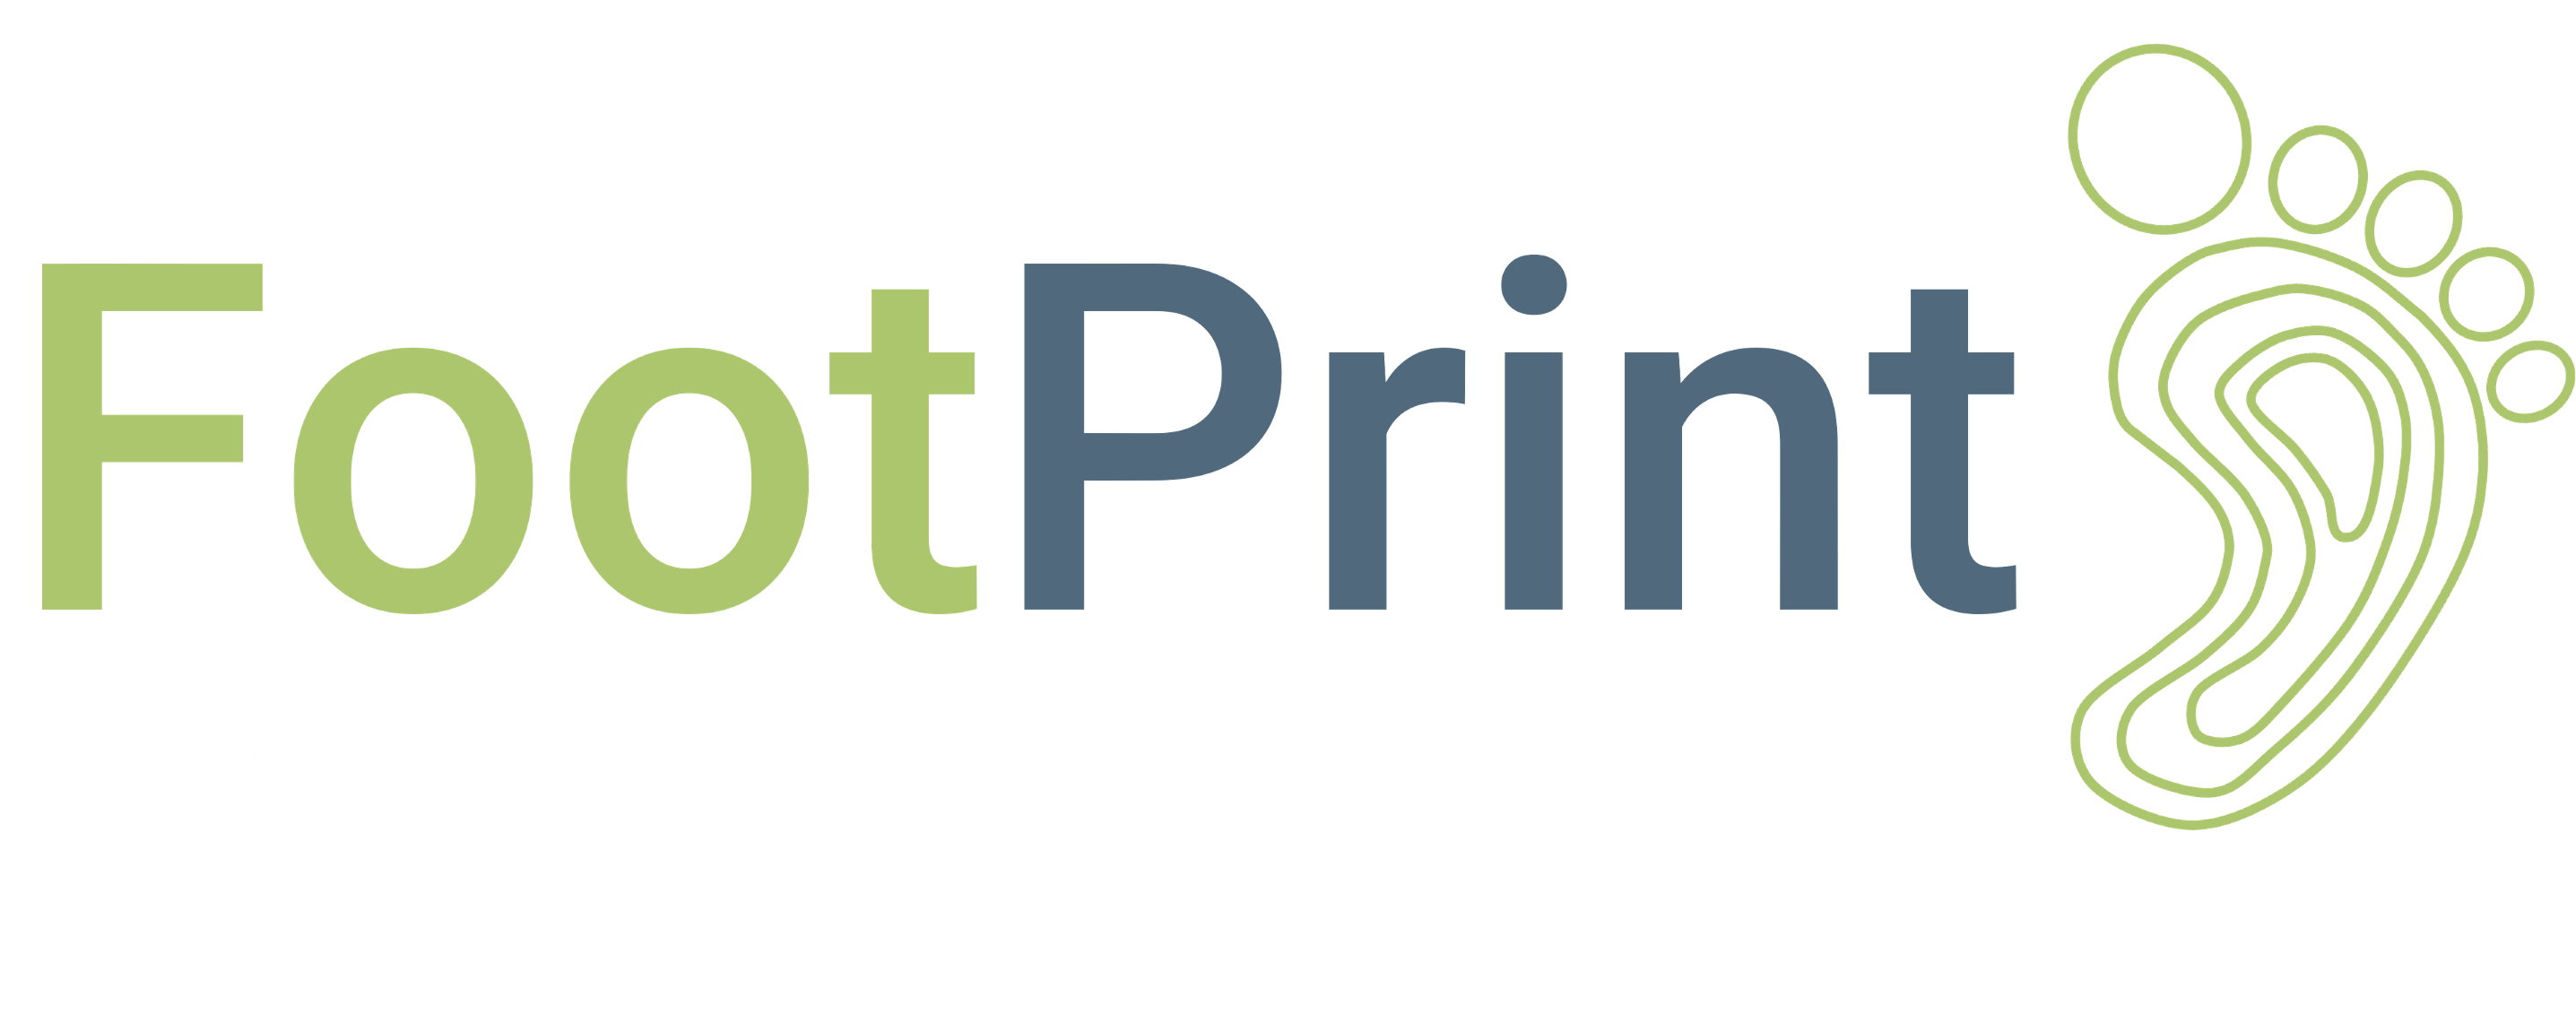 FootPrint - Sustainable Laboratory Solutions